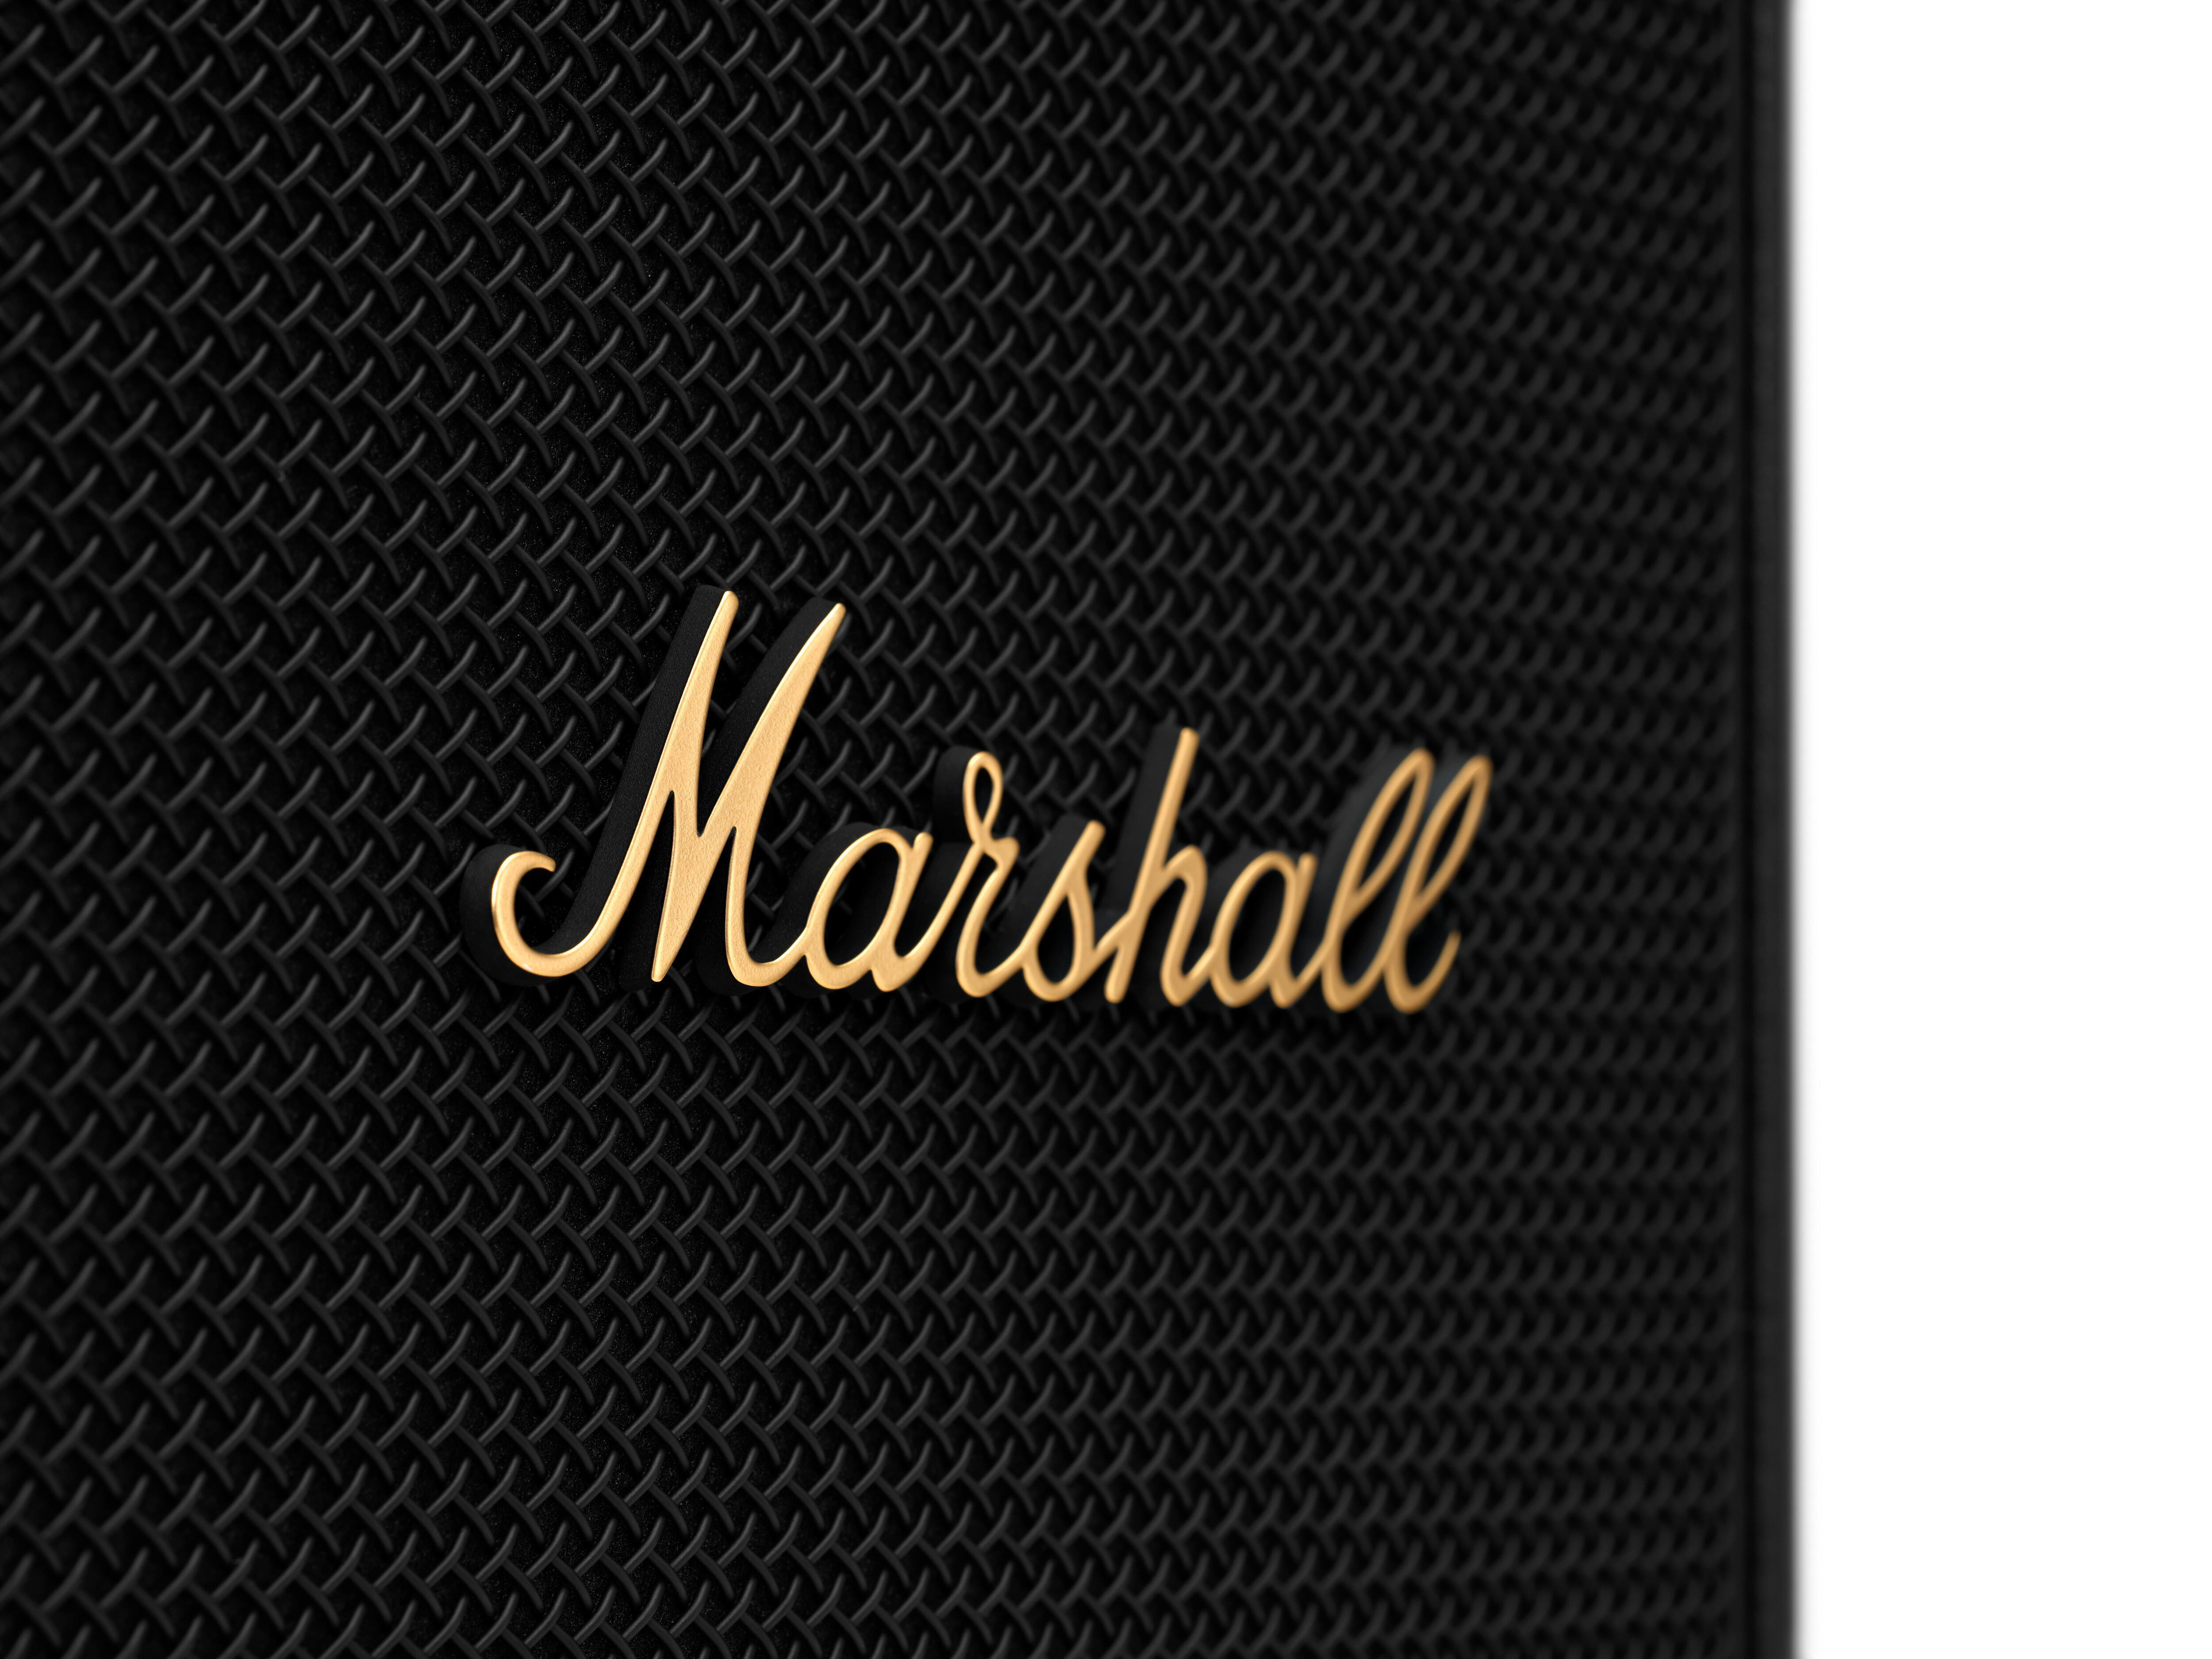 MARSHALL Tufton Mehrfarbig, Lautsprecher, Bluetooth Wasserfest